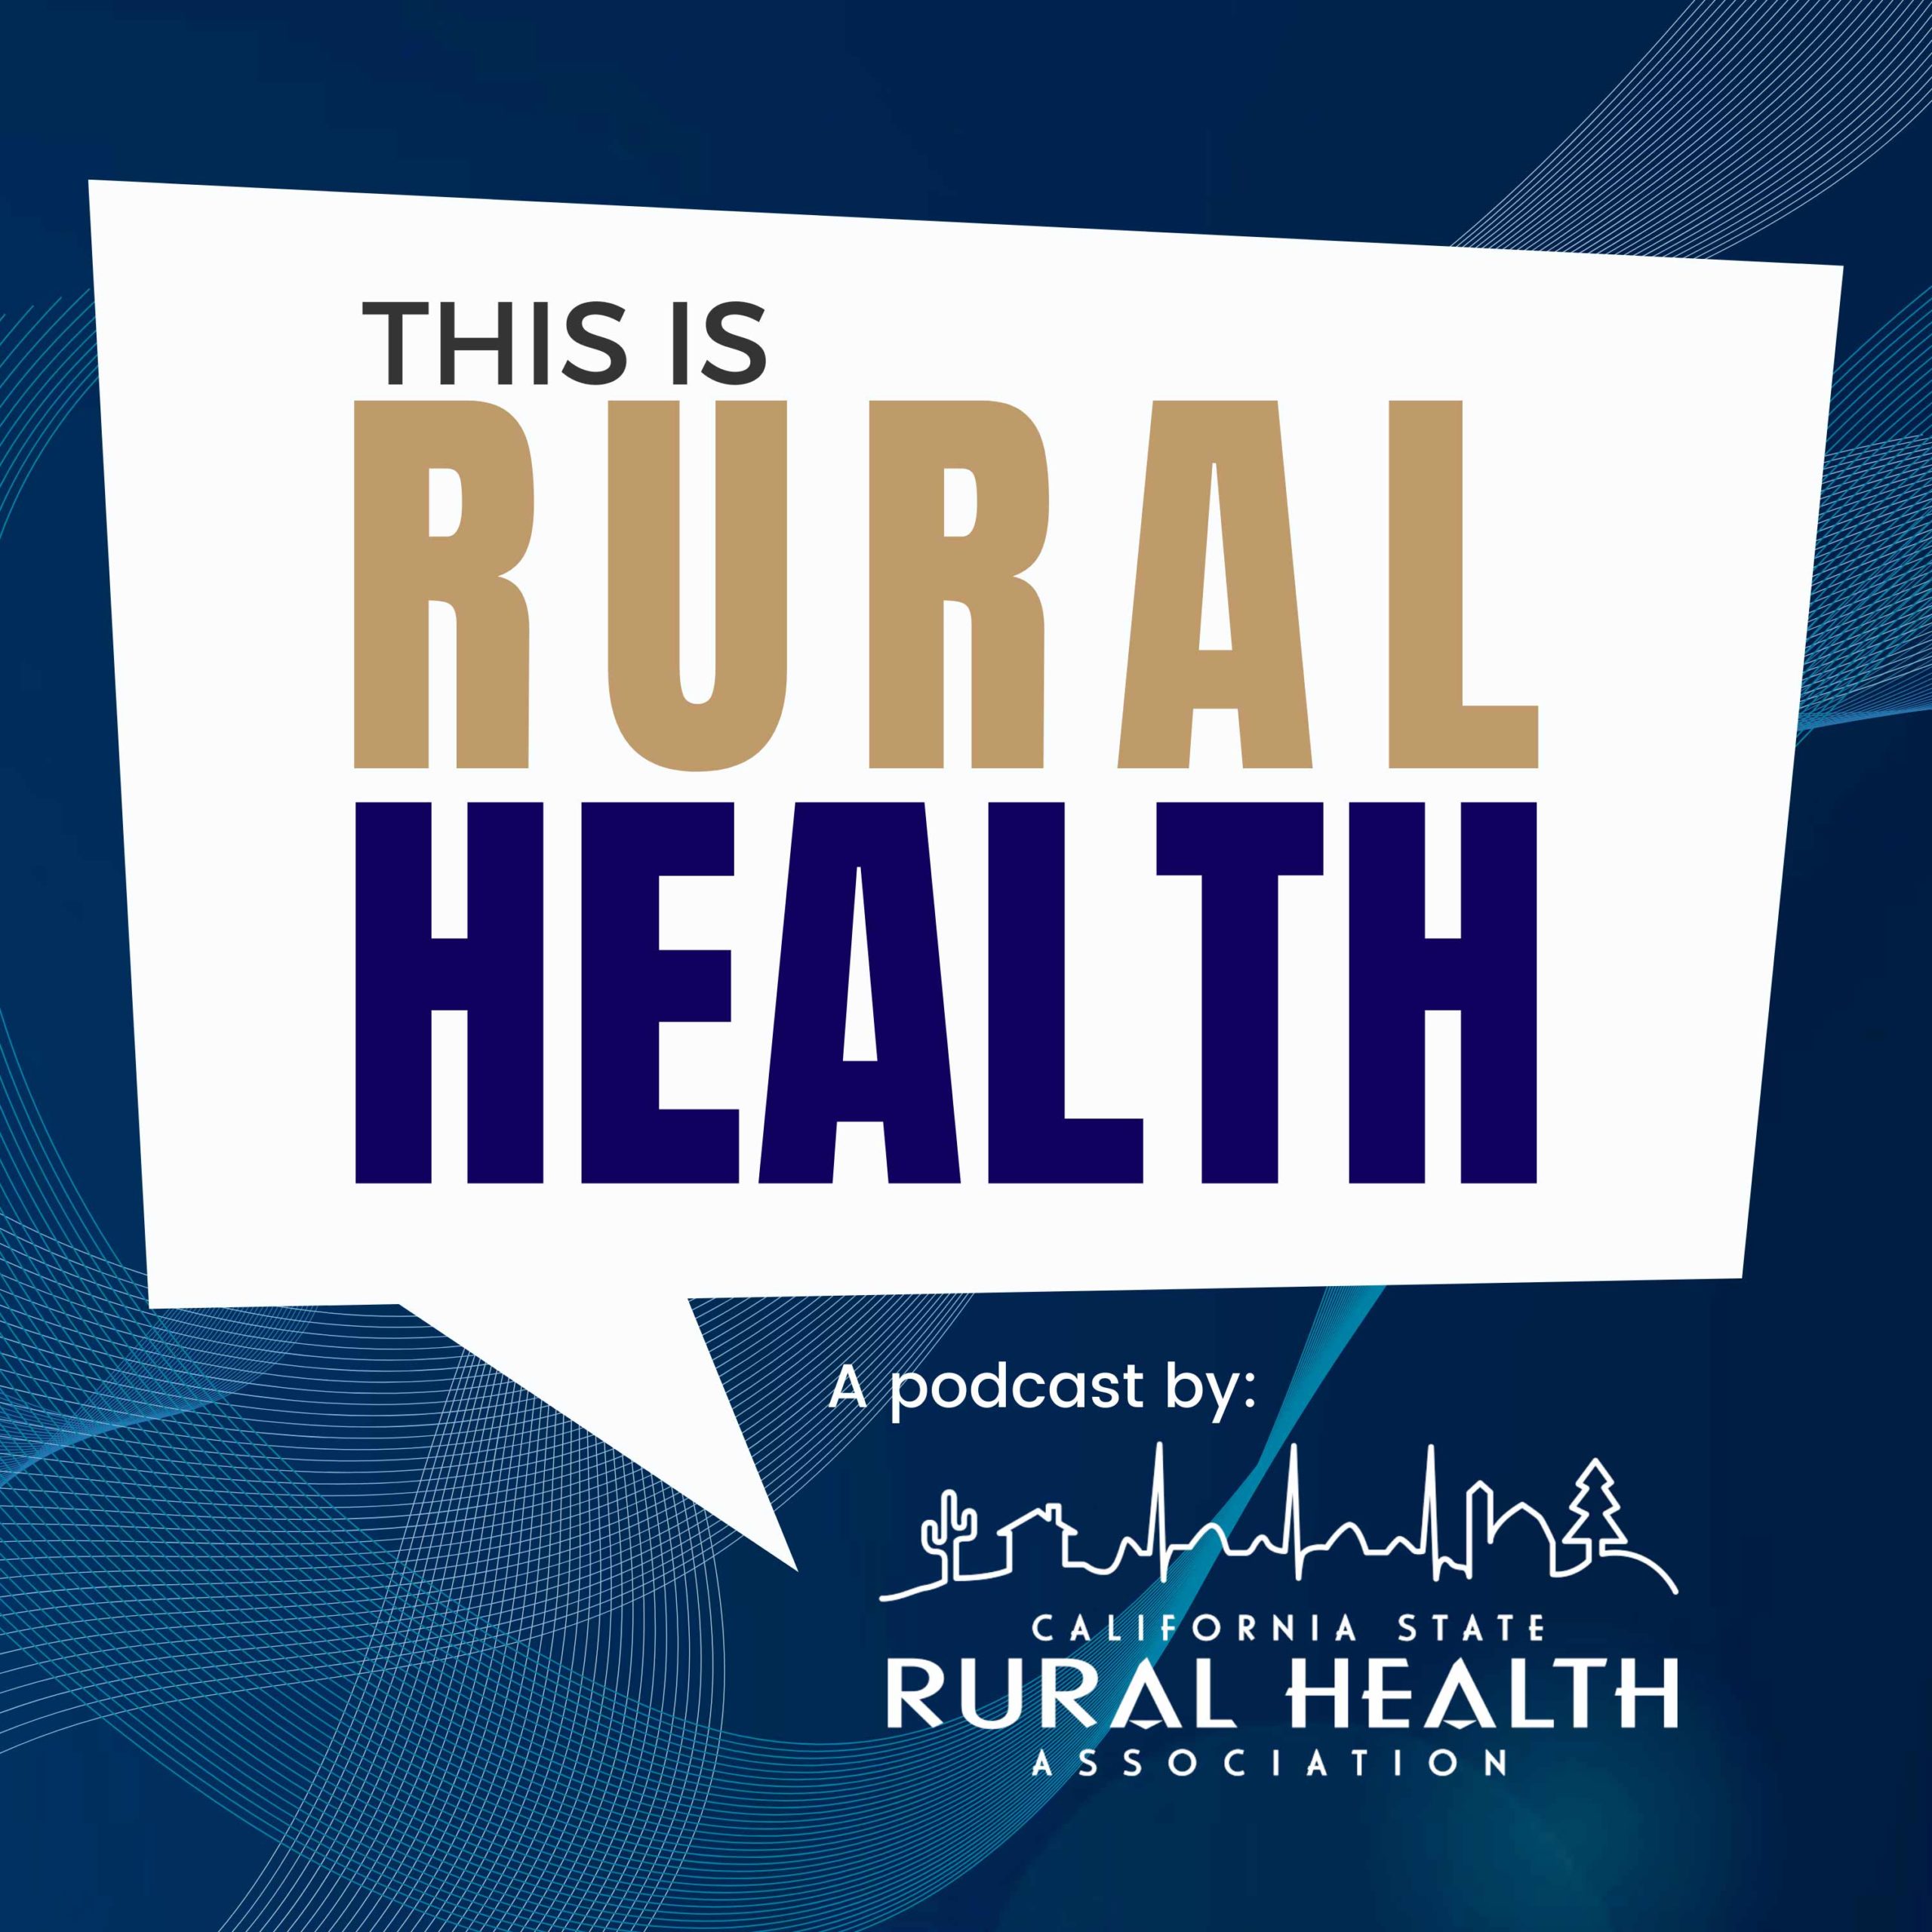 california state rural health association podcast logo